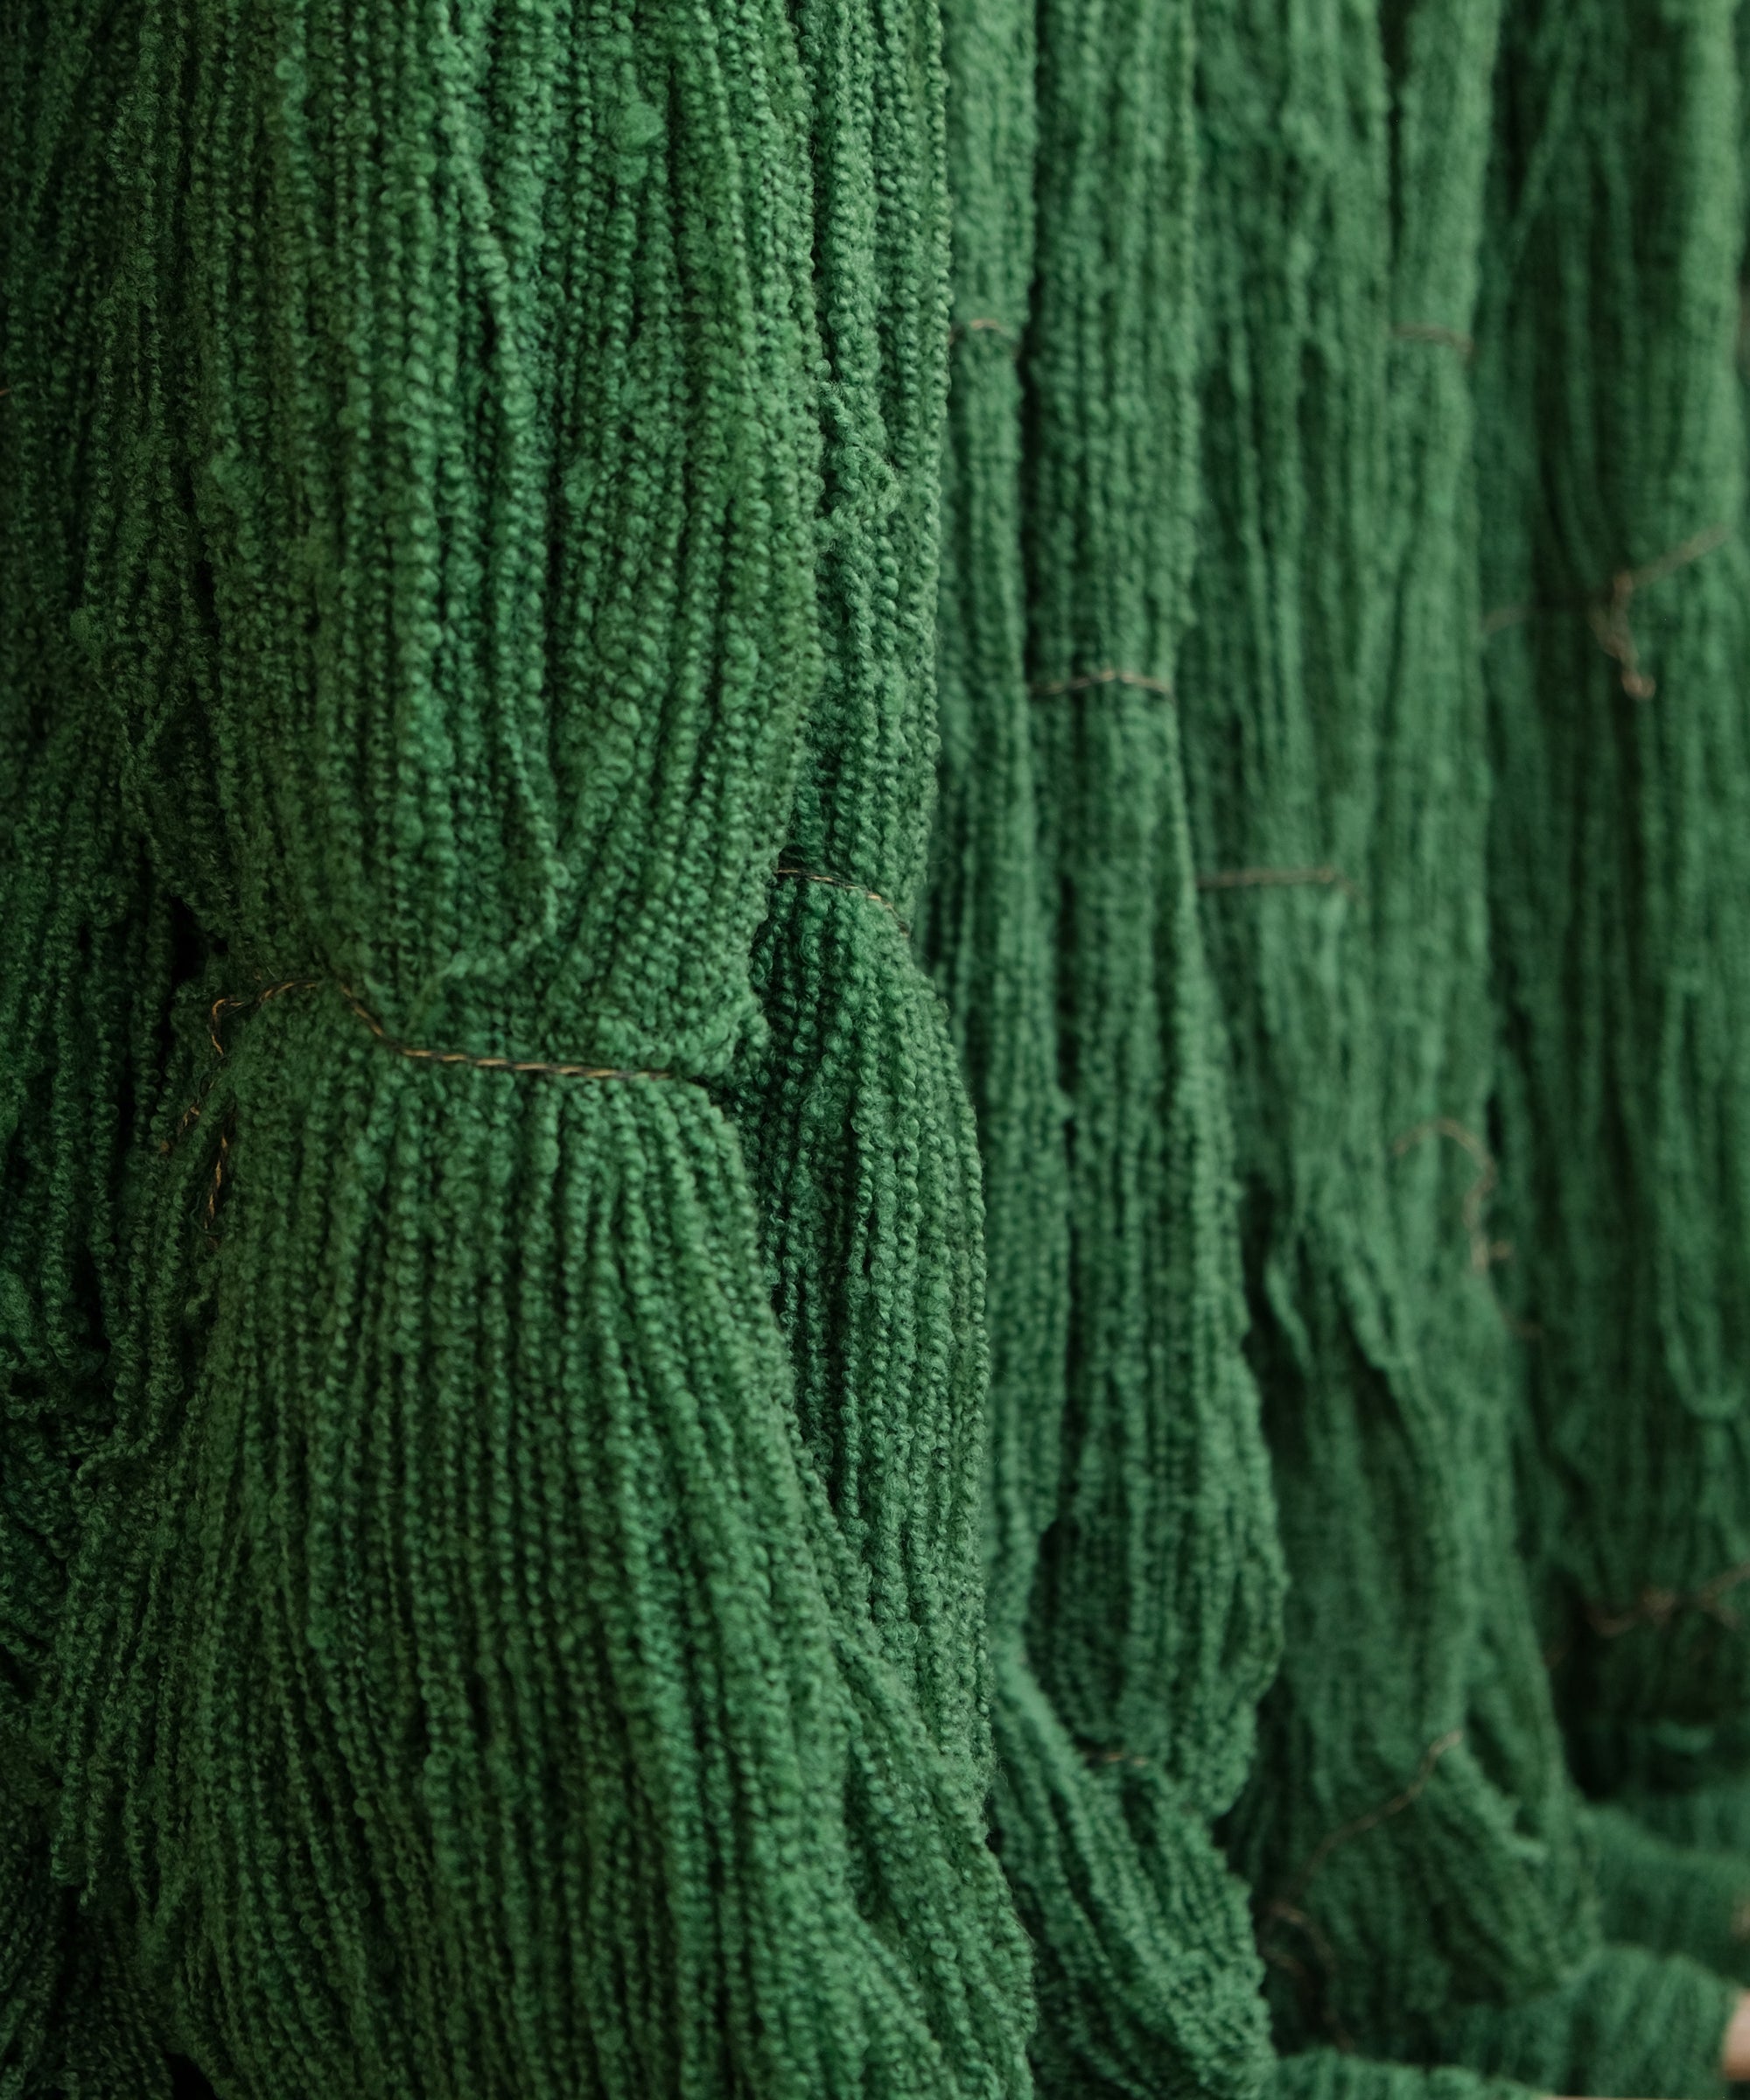 Cooper's cormo boucle yarn in artichoke green, drying.